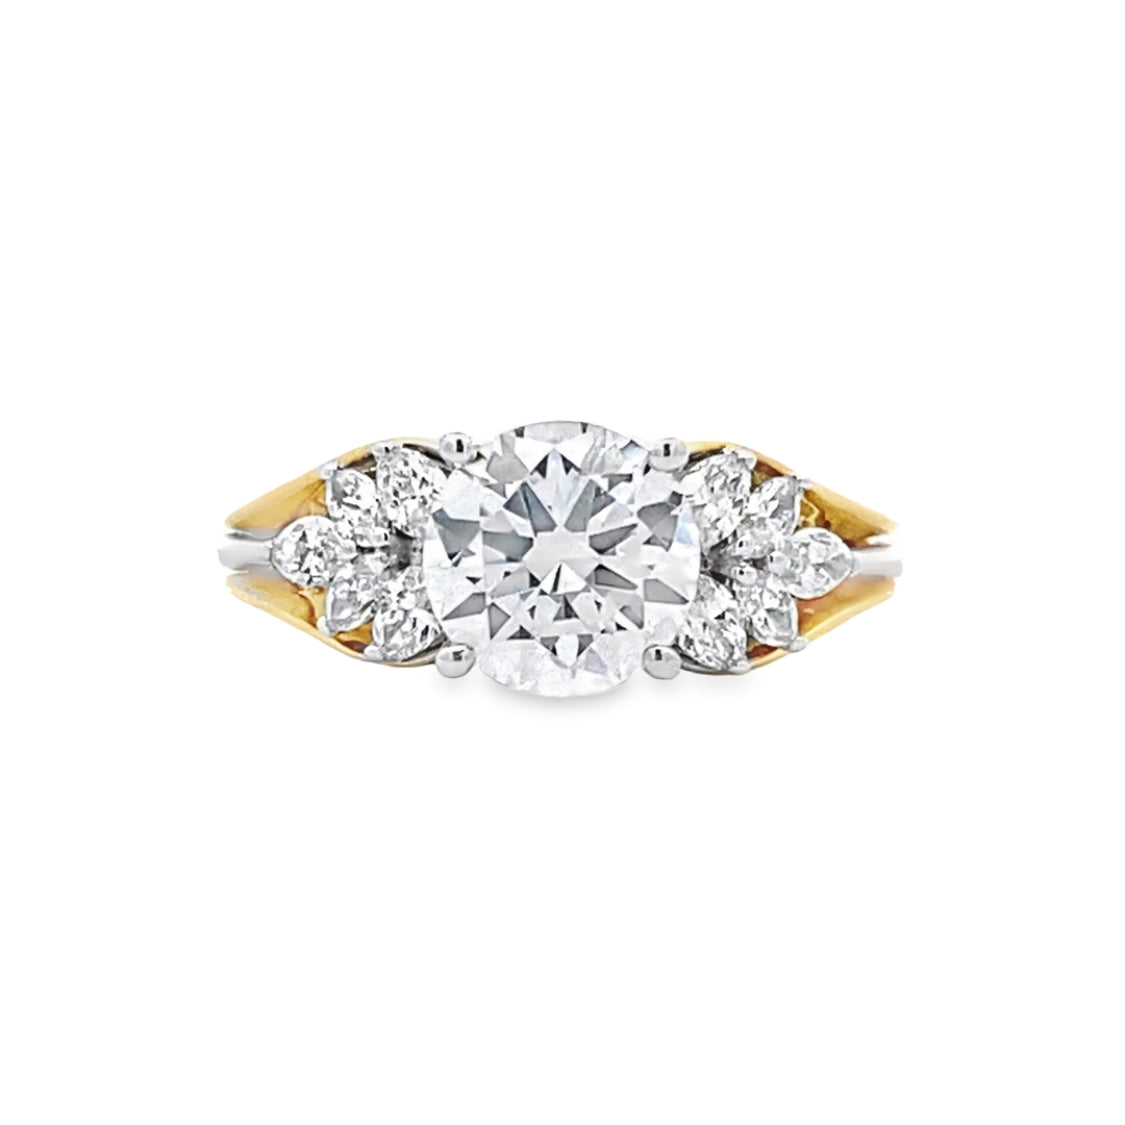 Simon G Jewelry 18 Karat Side Stones Marquise Diamond Engagement Ring LR2987